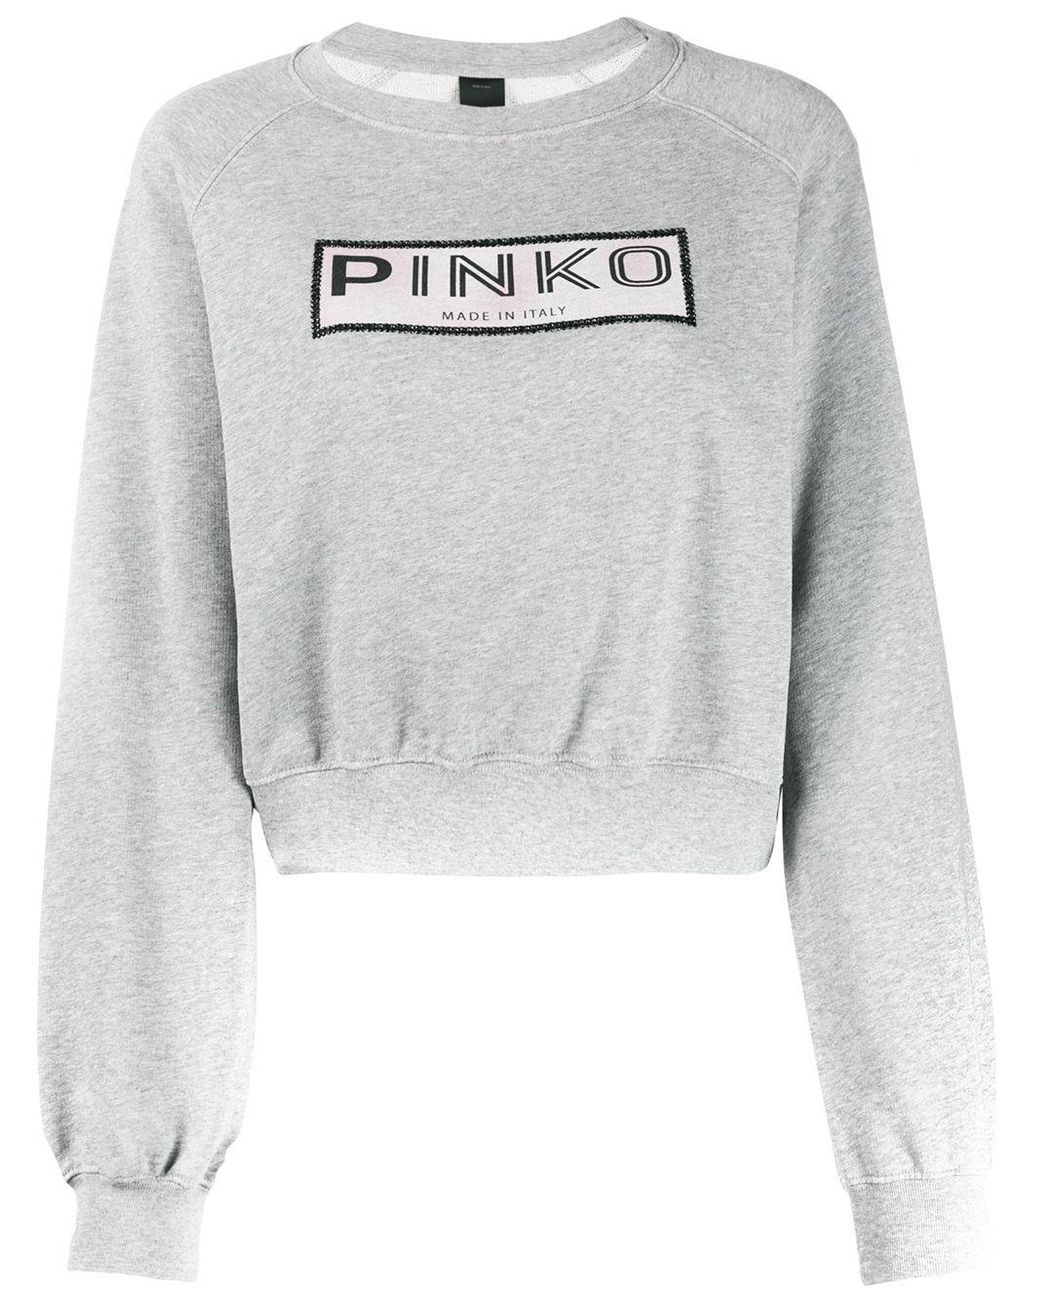 Pinko Embellished Logo Cropped Sweatshirt in Grey (Gray) - Lyst